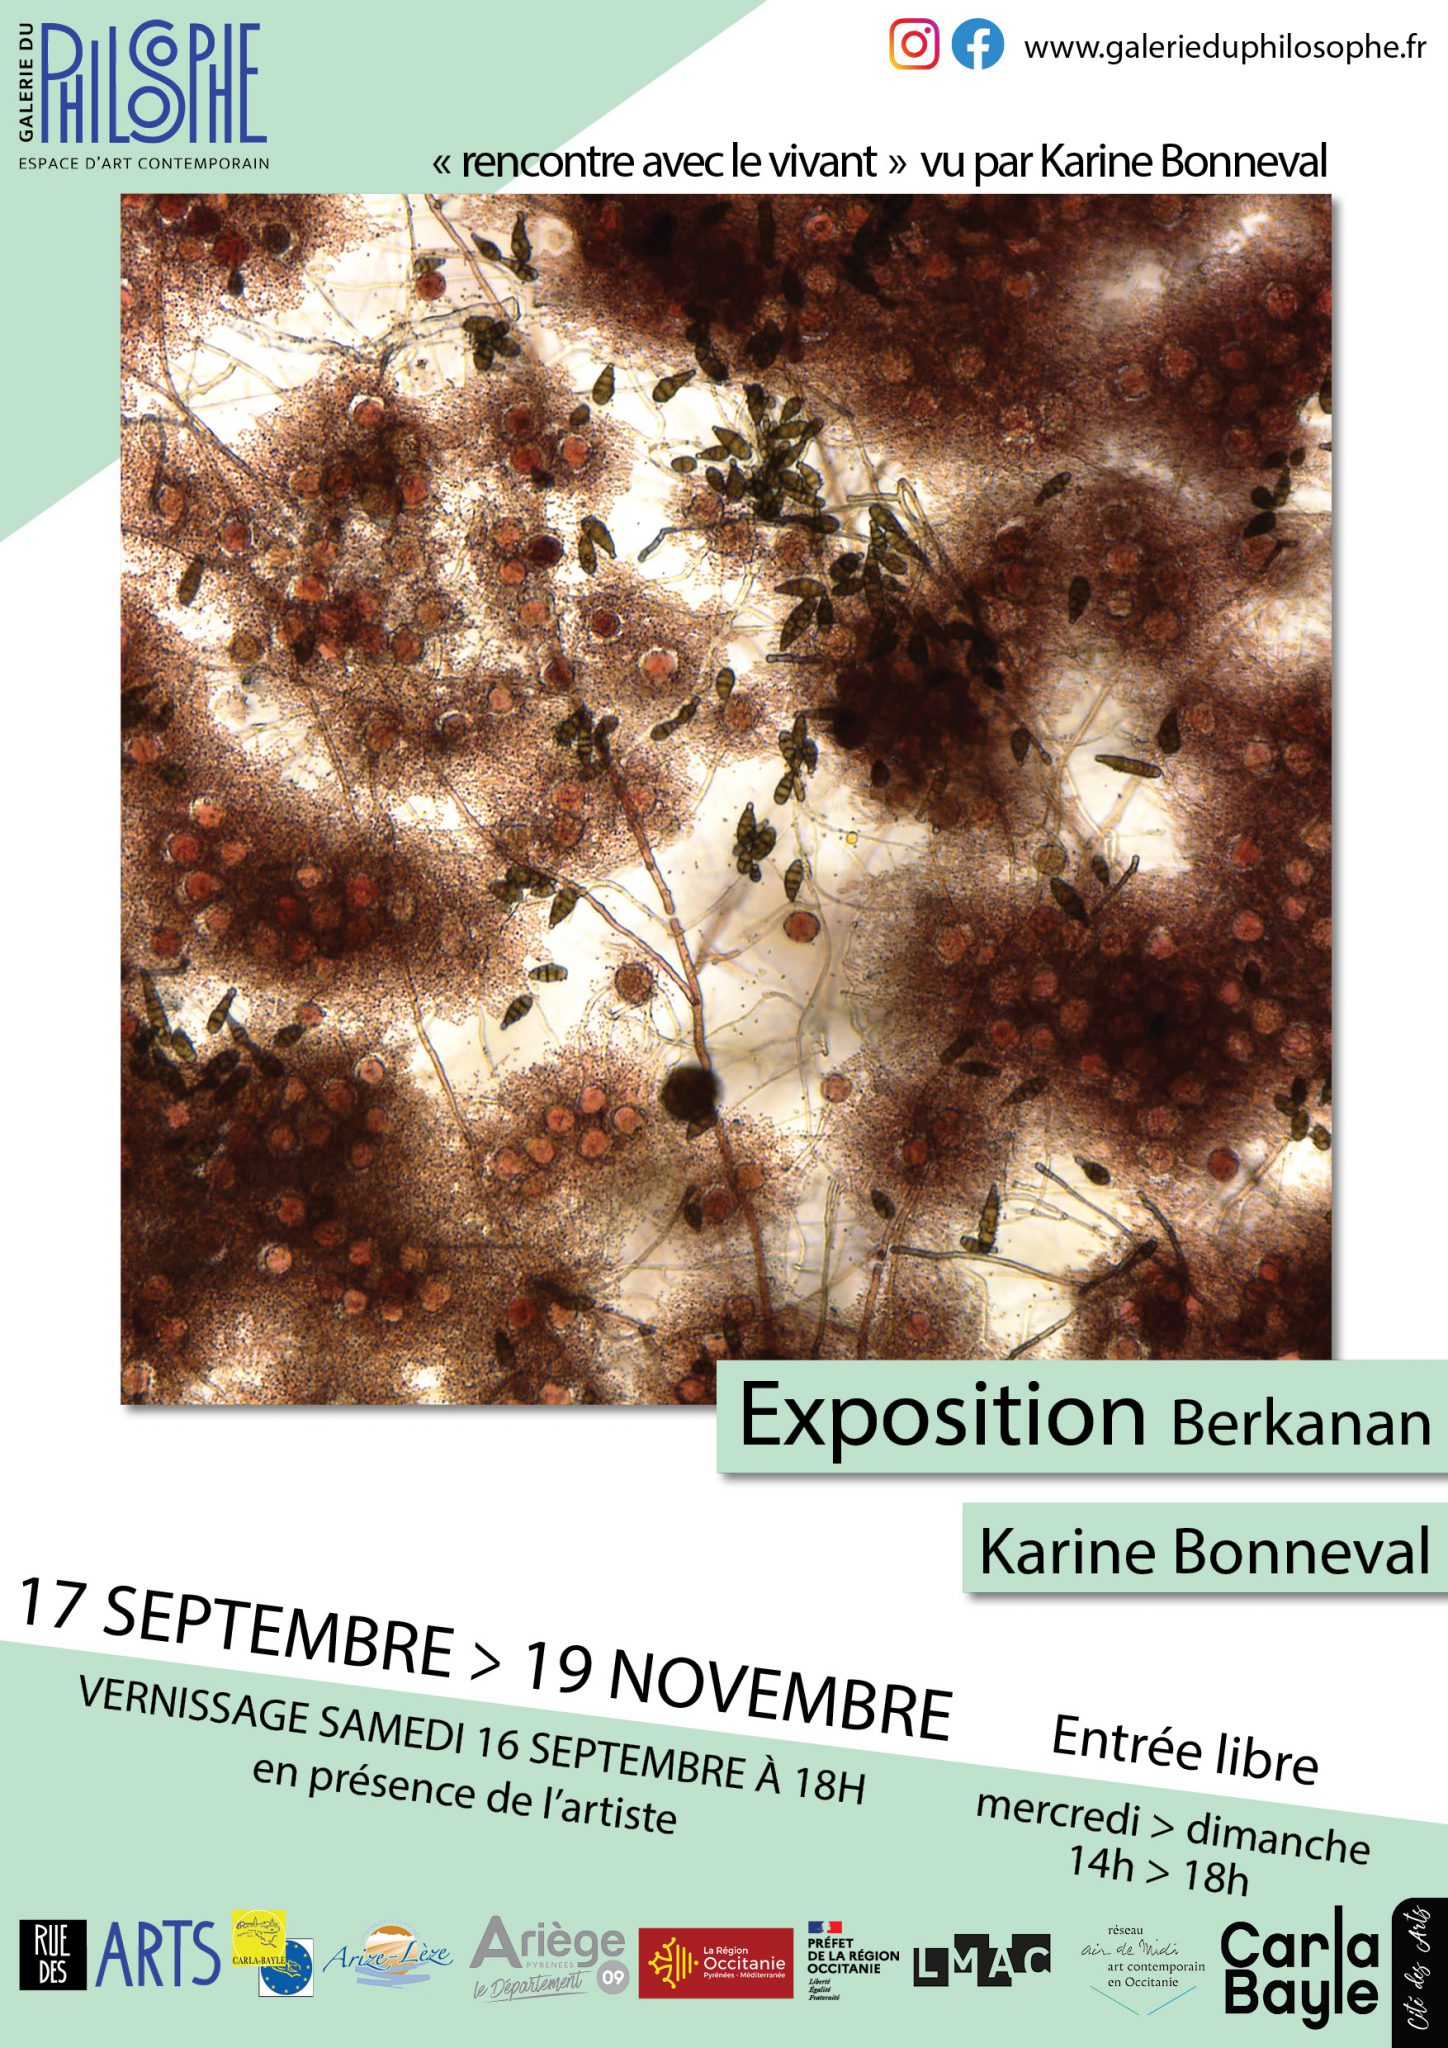 Exposition "Berkanan" par Karine Bonneval